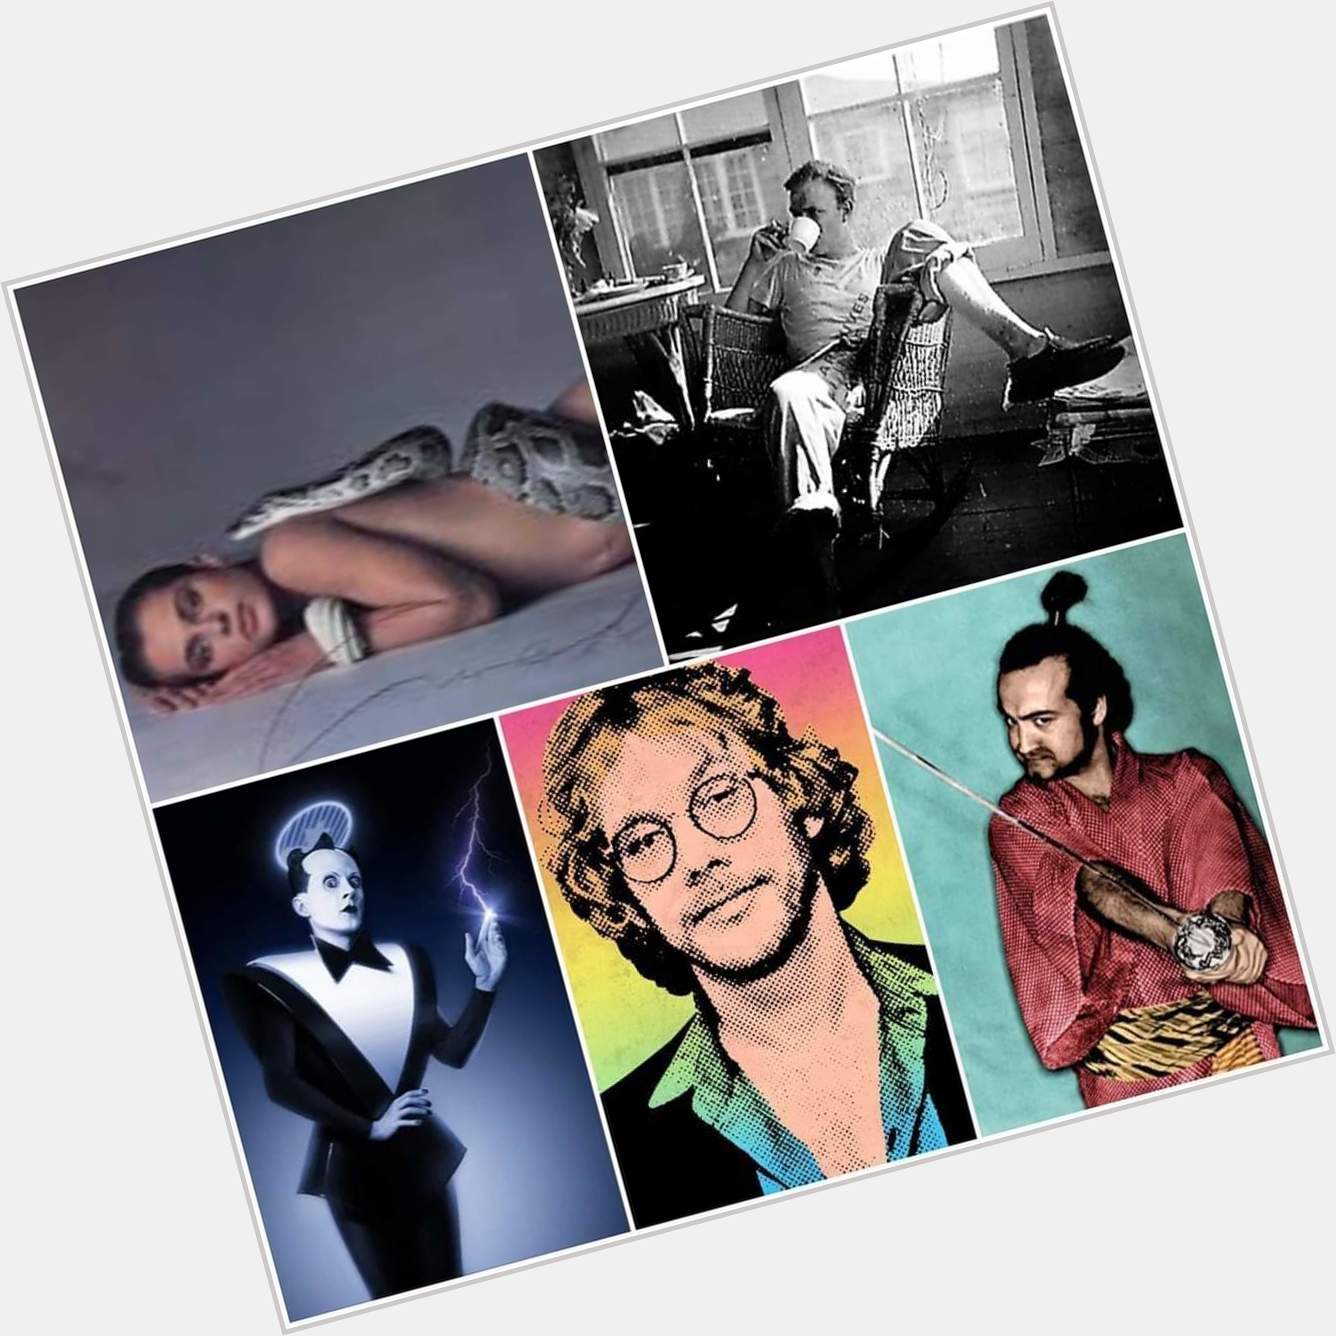 January 24th 

Happy Birthday to Nastassja Kinski, Robert Motherwell, Klaus Nomi, Warren Zevon, and John Belushi! 